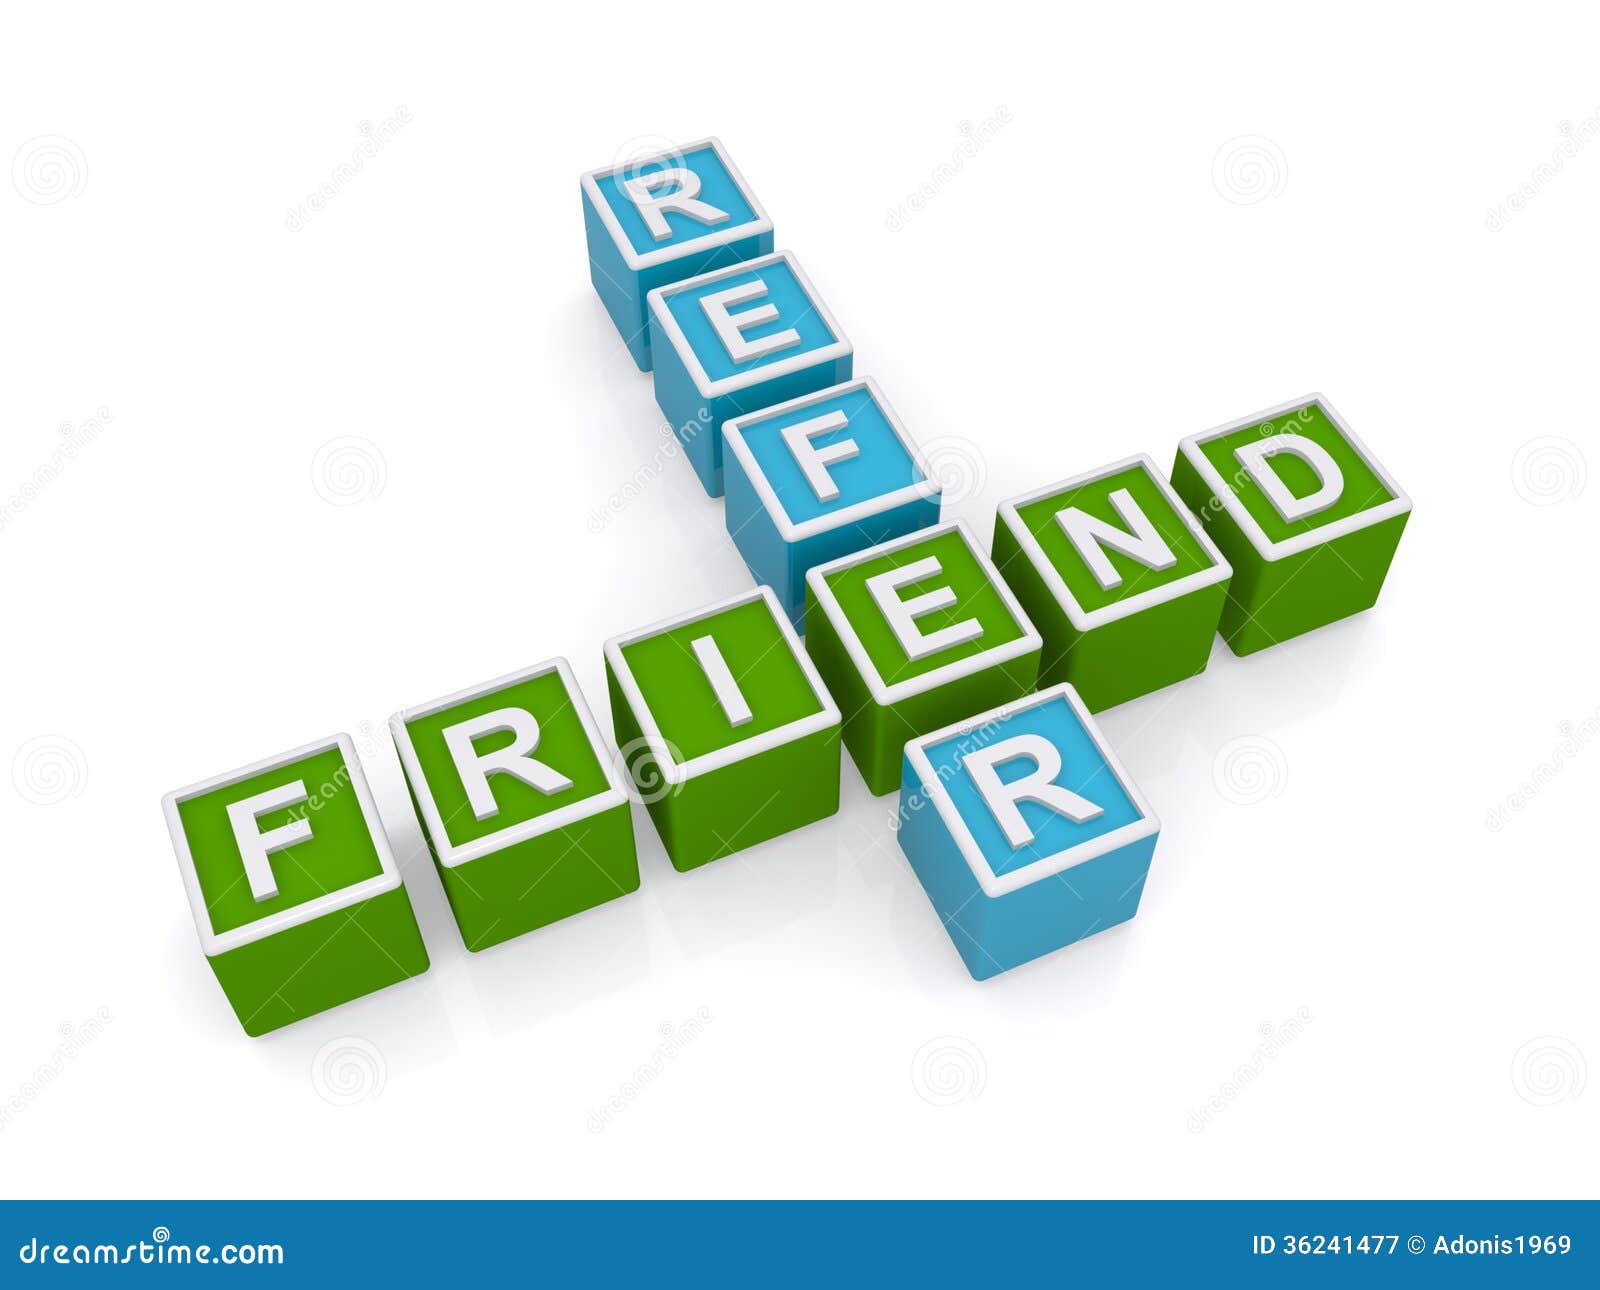 refer friend sign